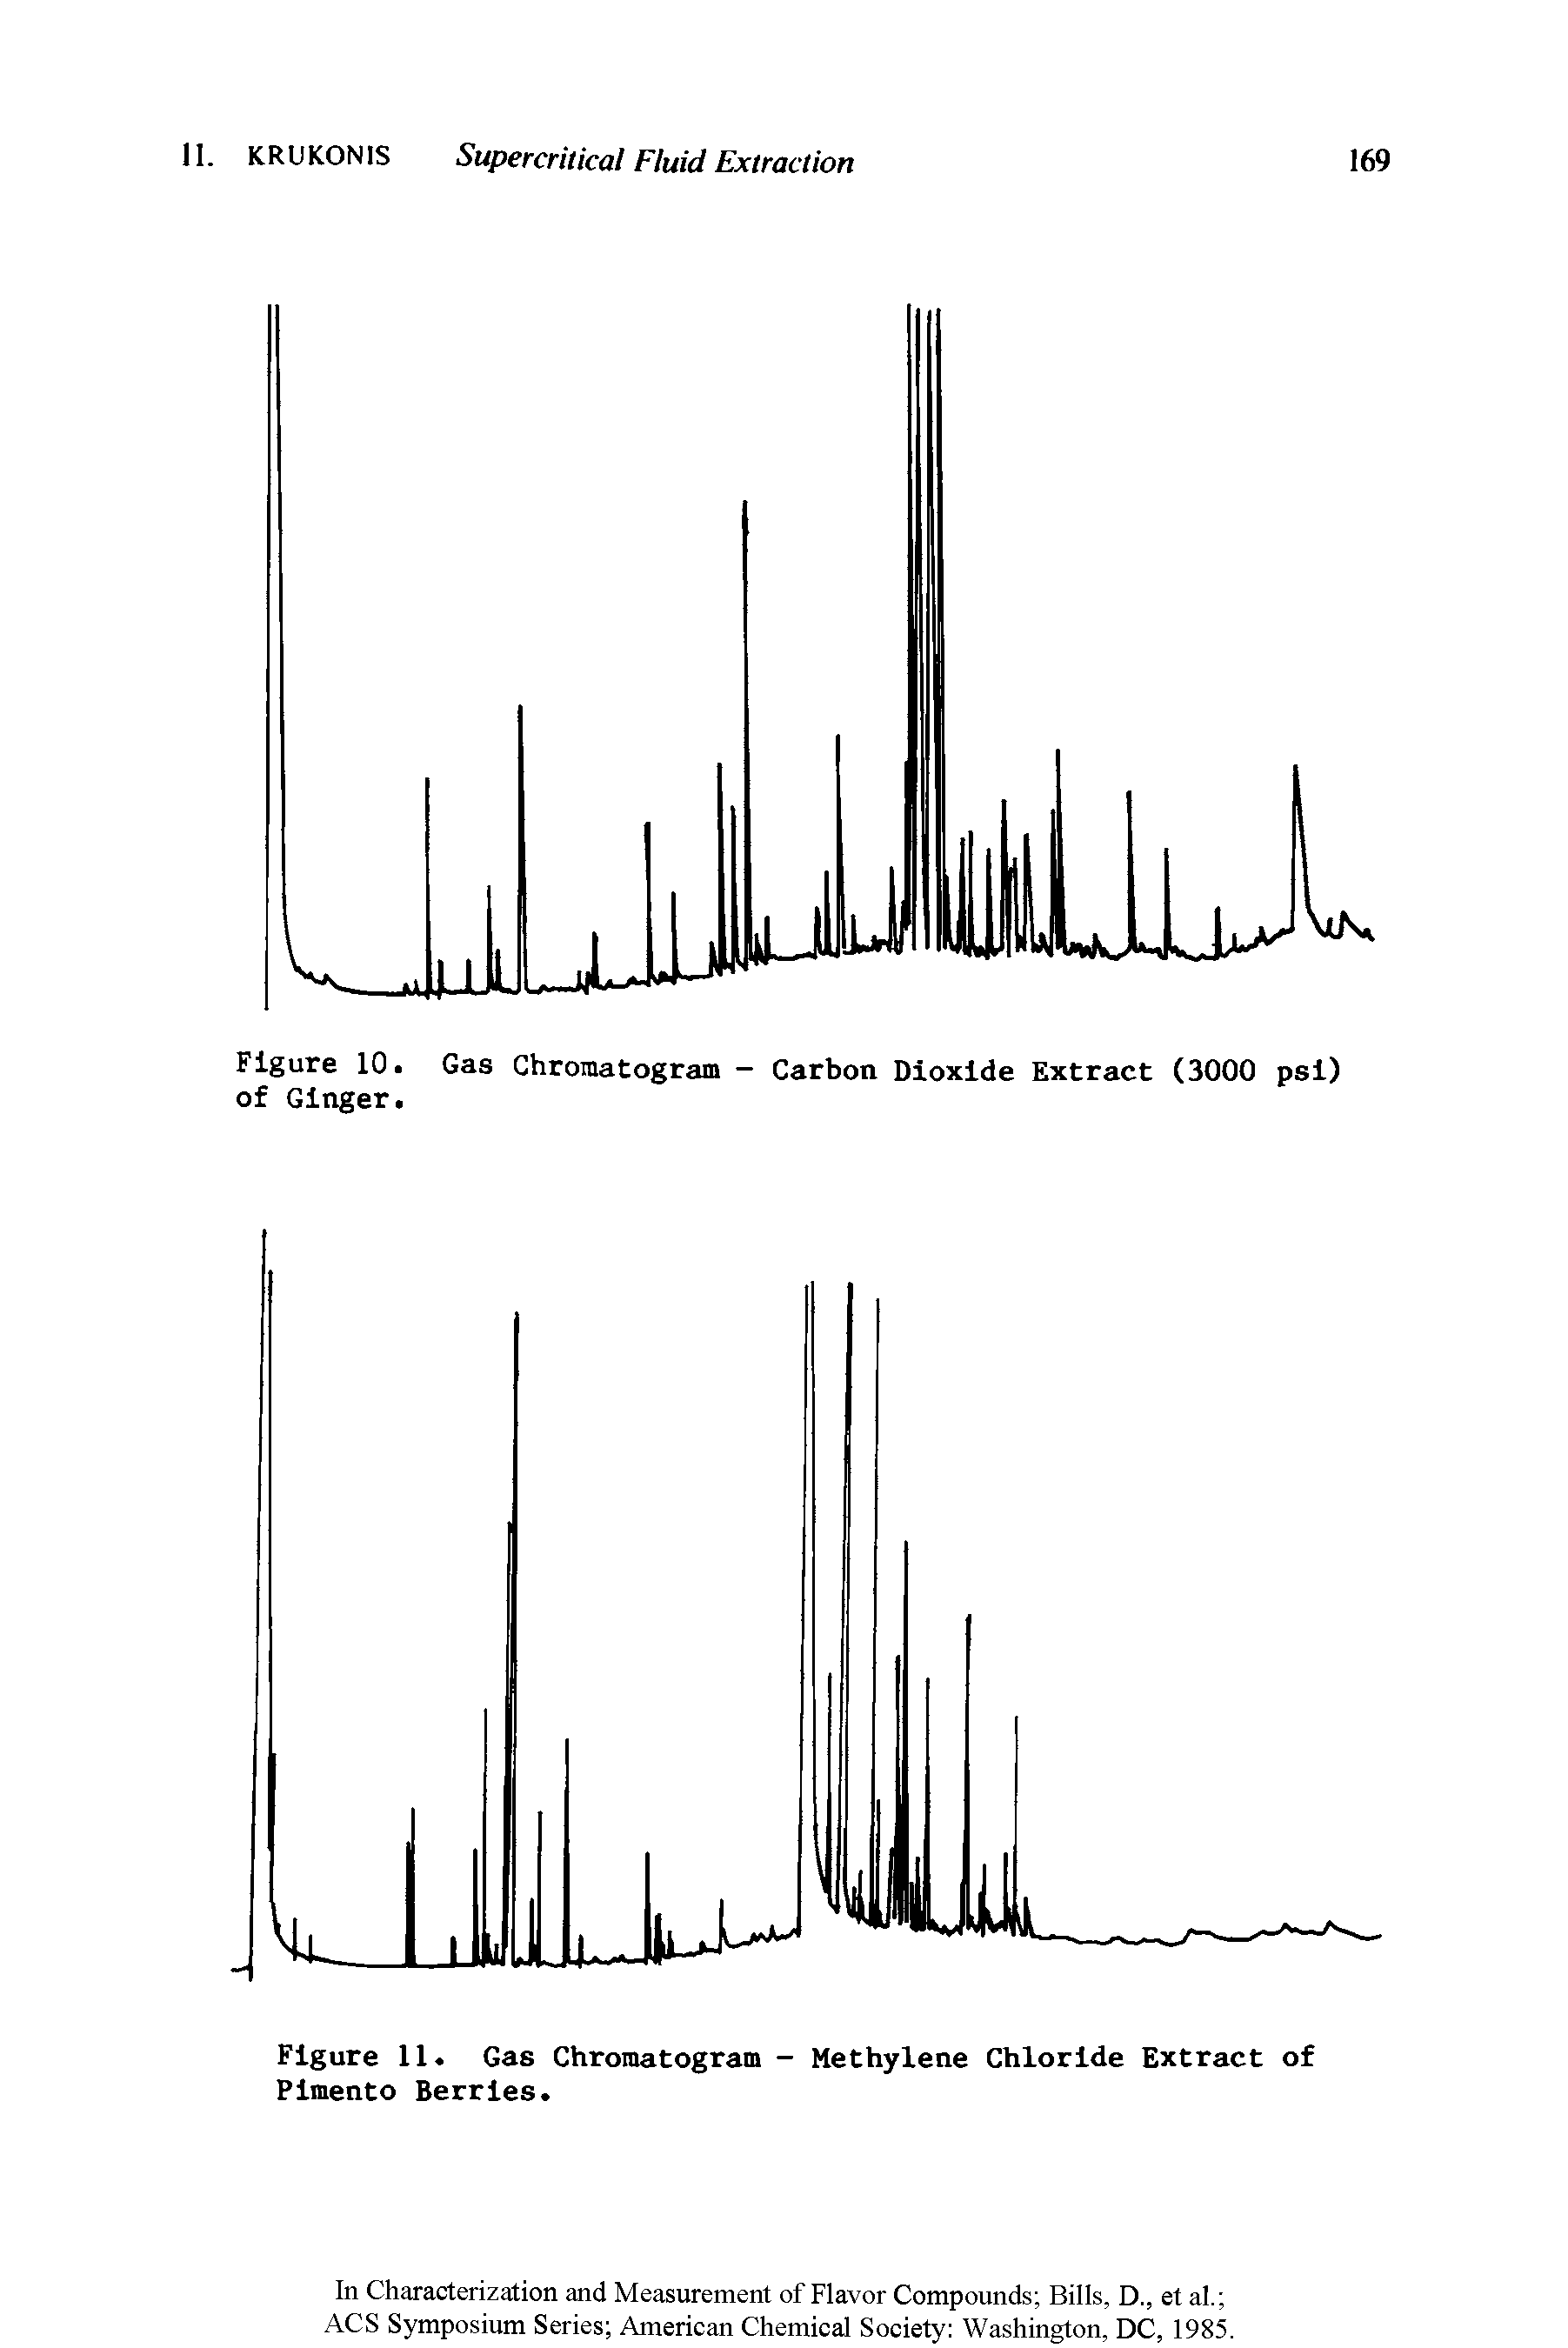 Figure 11. Gas Chromatogram - Methylene Chloride Extract of Pimento Berries.